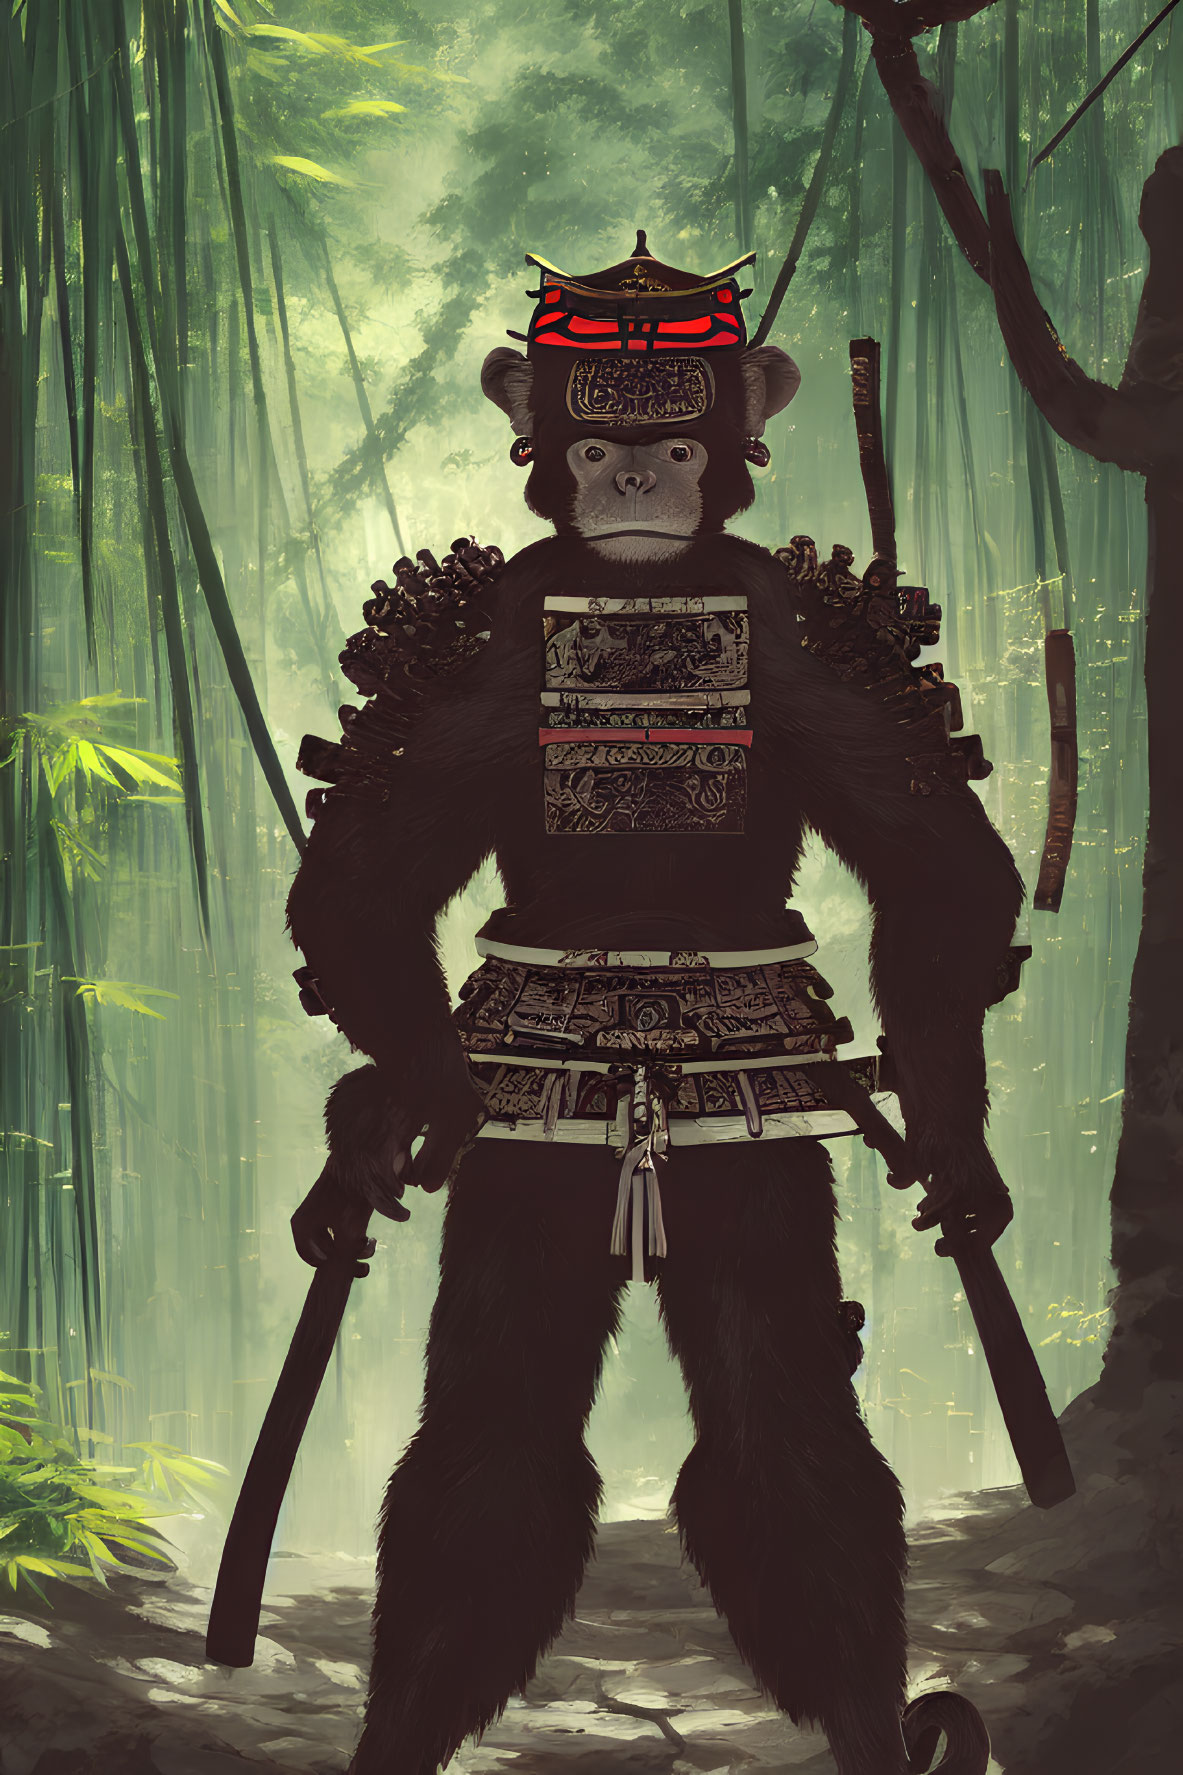 Gorilla in Samurai Armor with Katana in Bamboo Forest